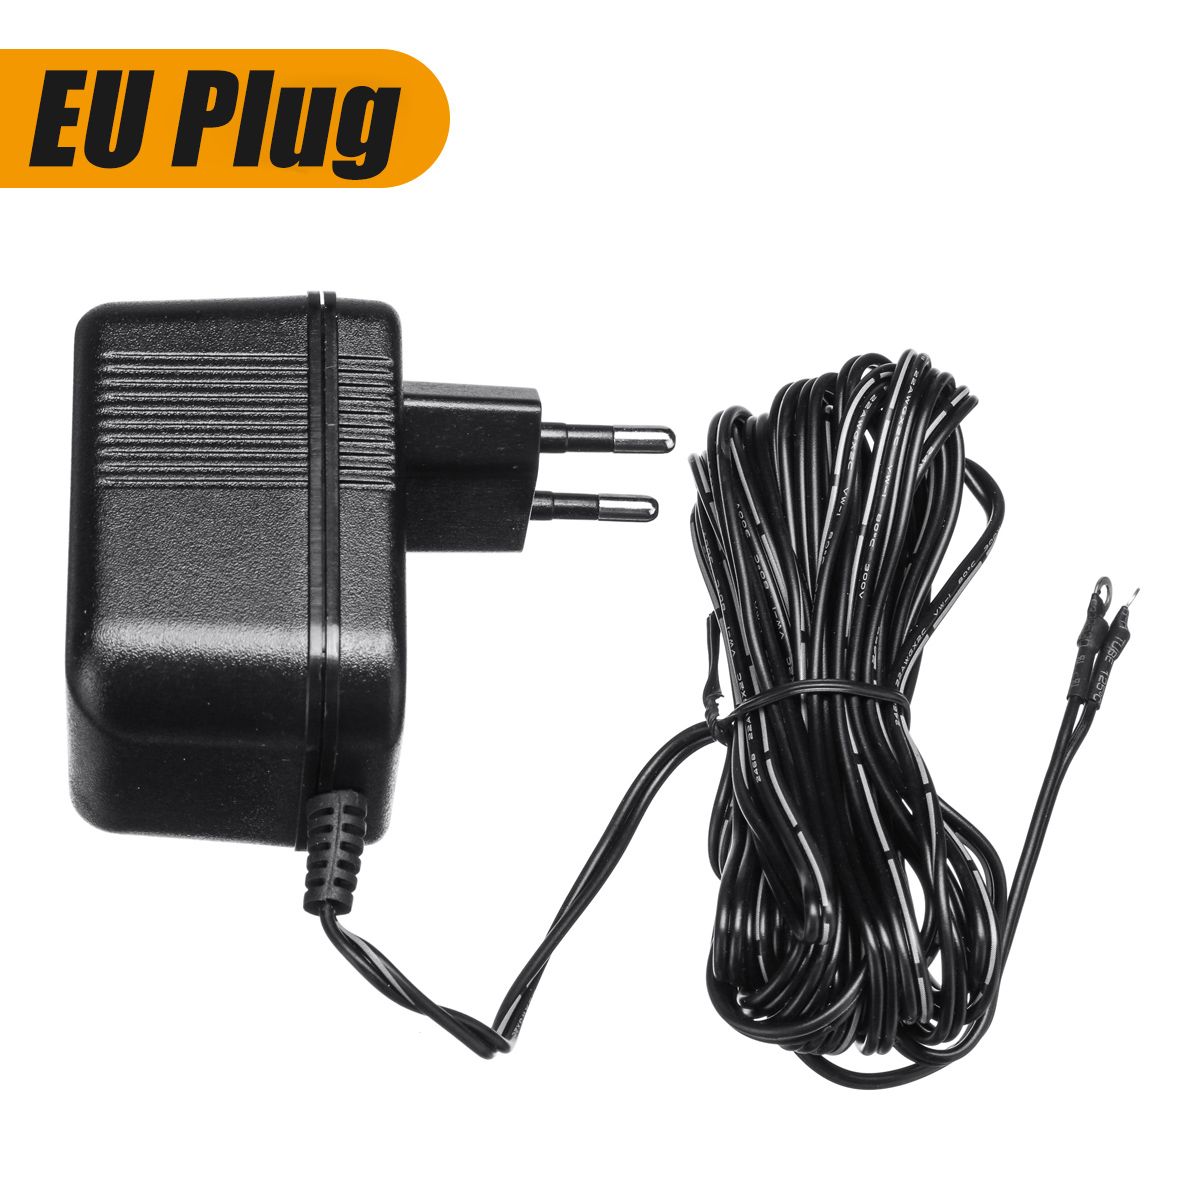 10M-AU-PlugUK-PlugEU-Plug-Power-Supply-Adapter-Transformer-for-Video-Ring-Doorbell-1433605